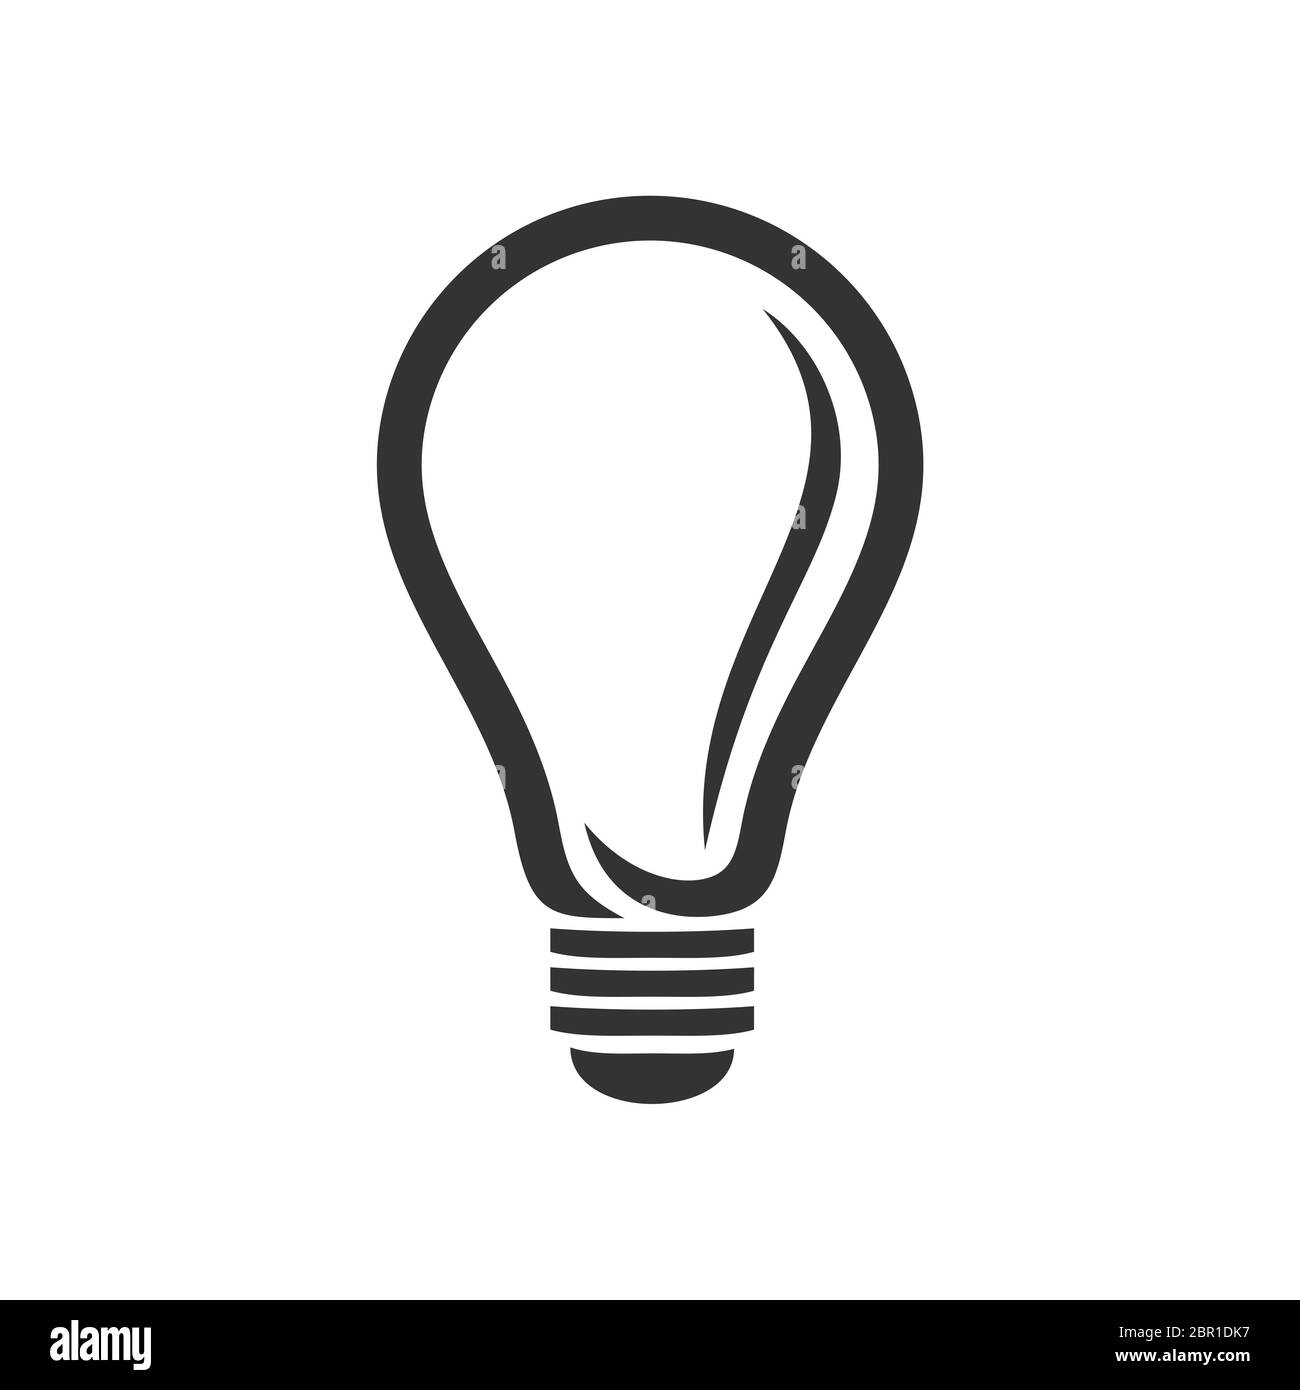 Bulb logo Black and White Stock Photos & Images - Alamy